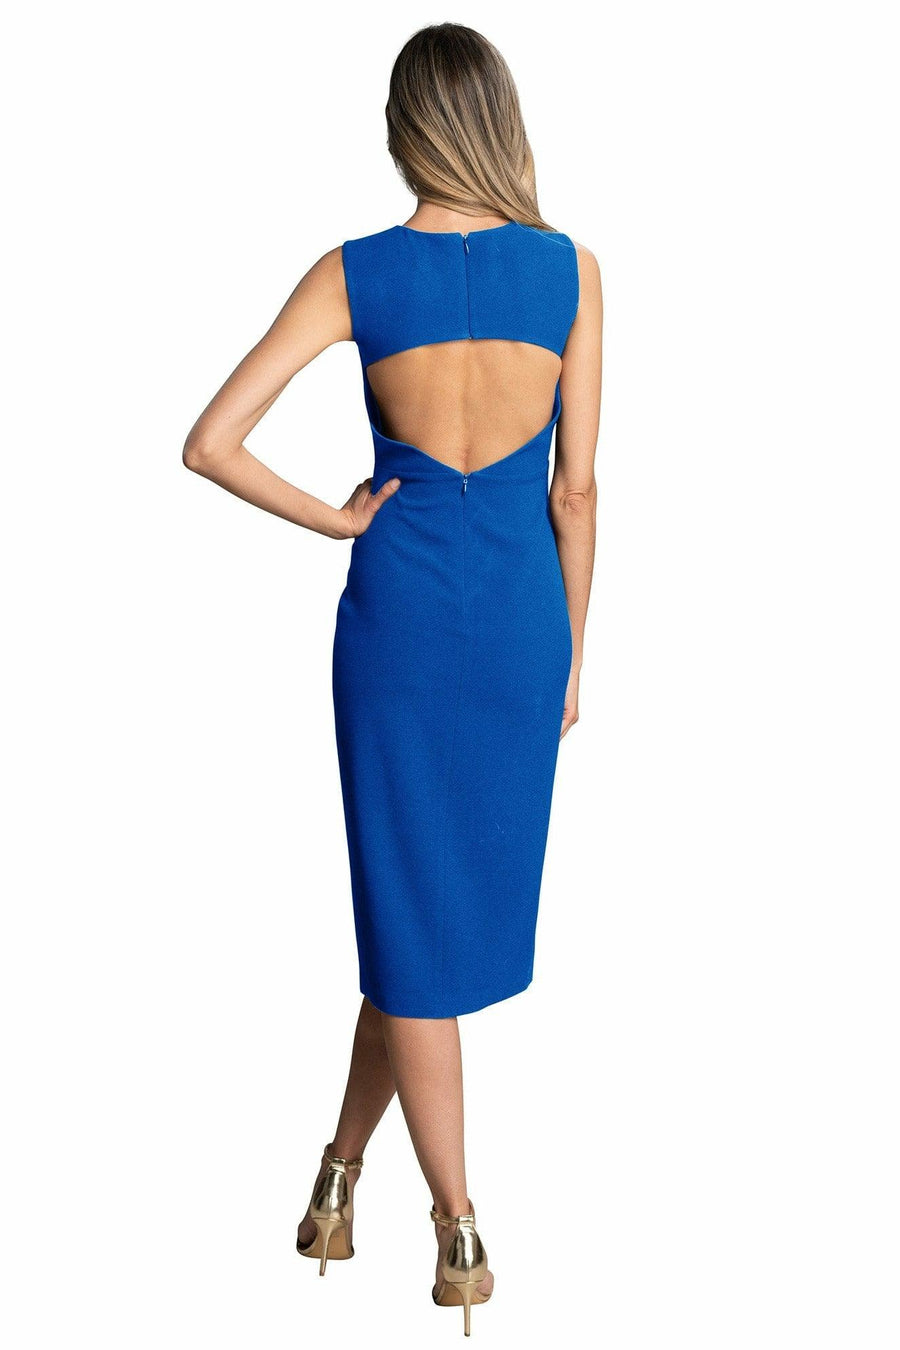 Maeve Dress / ELECTRIC BLUE